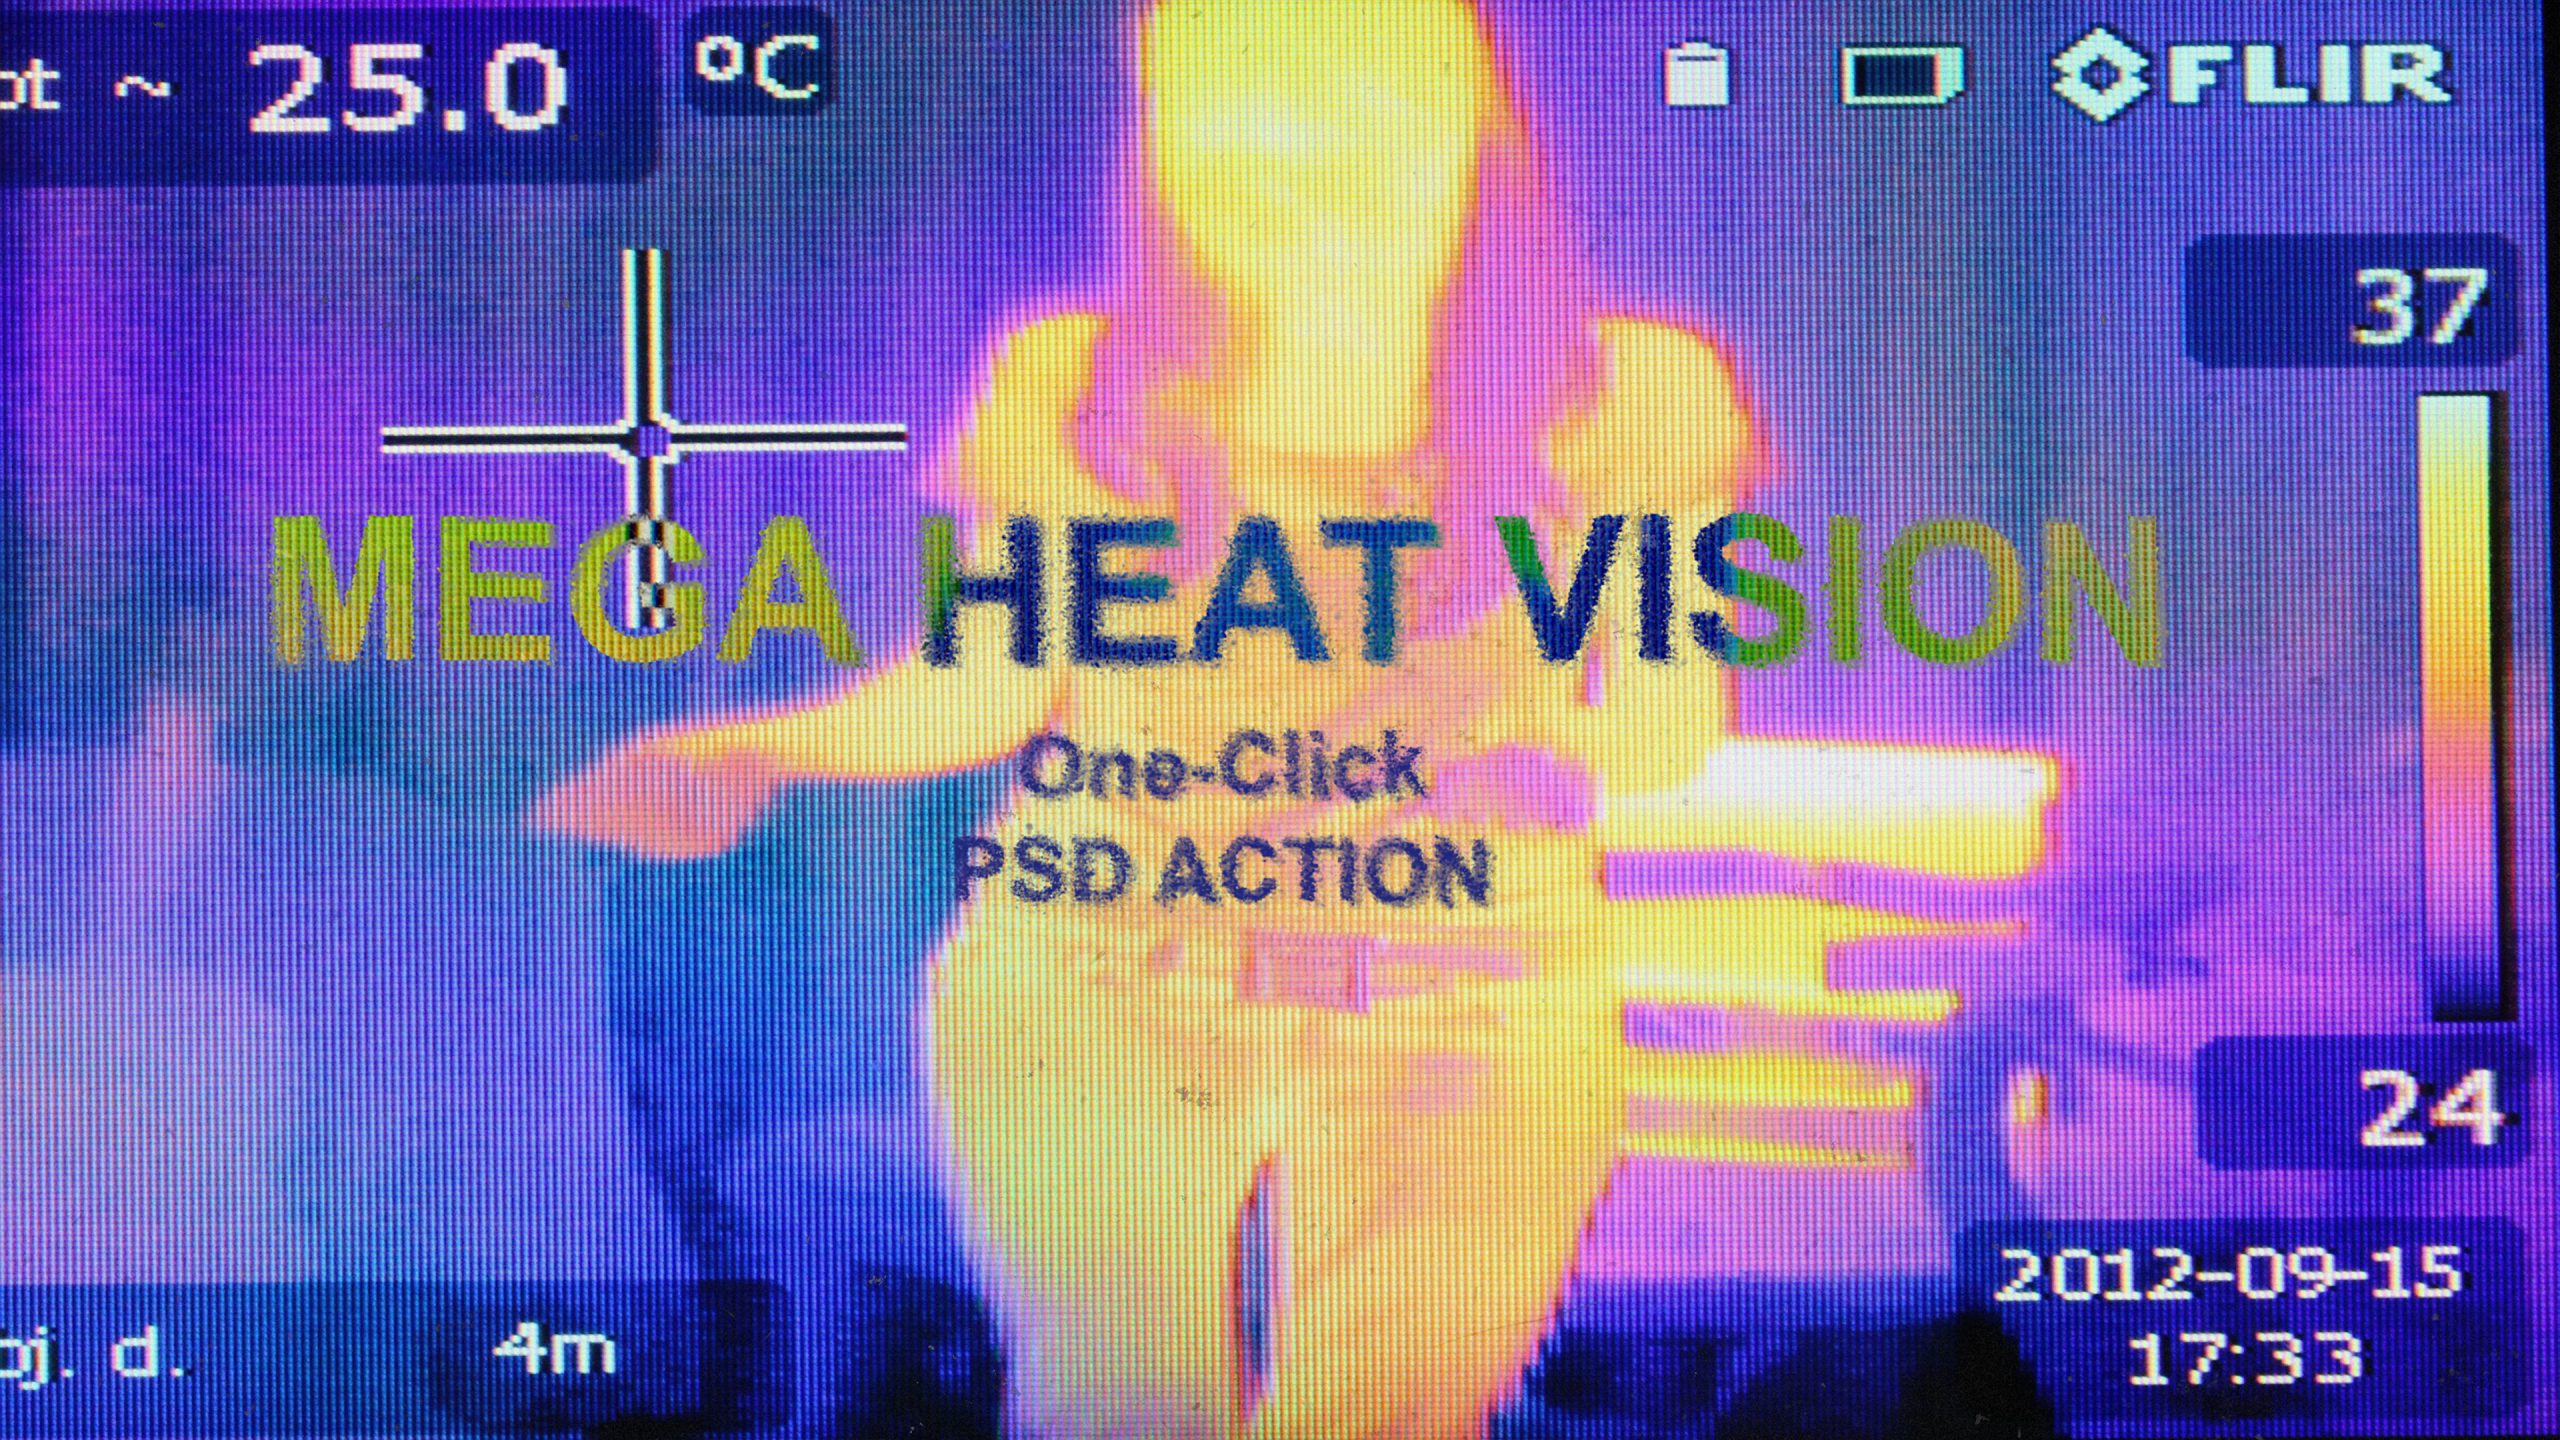 Mega heat vision action photoshop Undyed creative studio